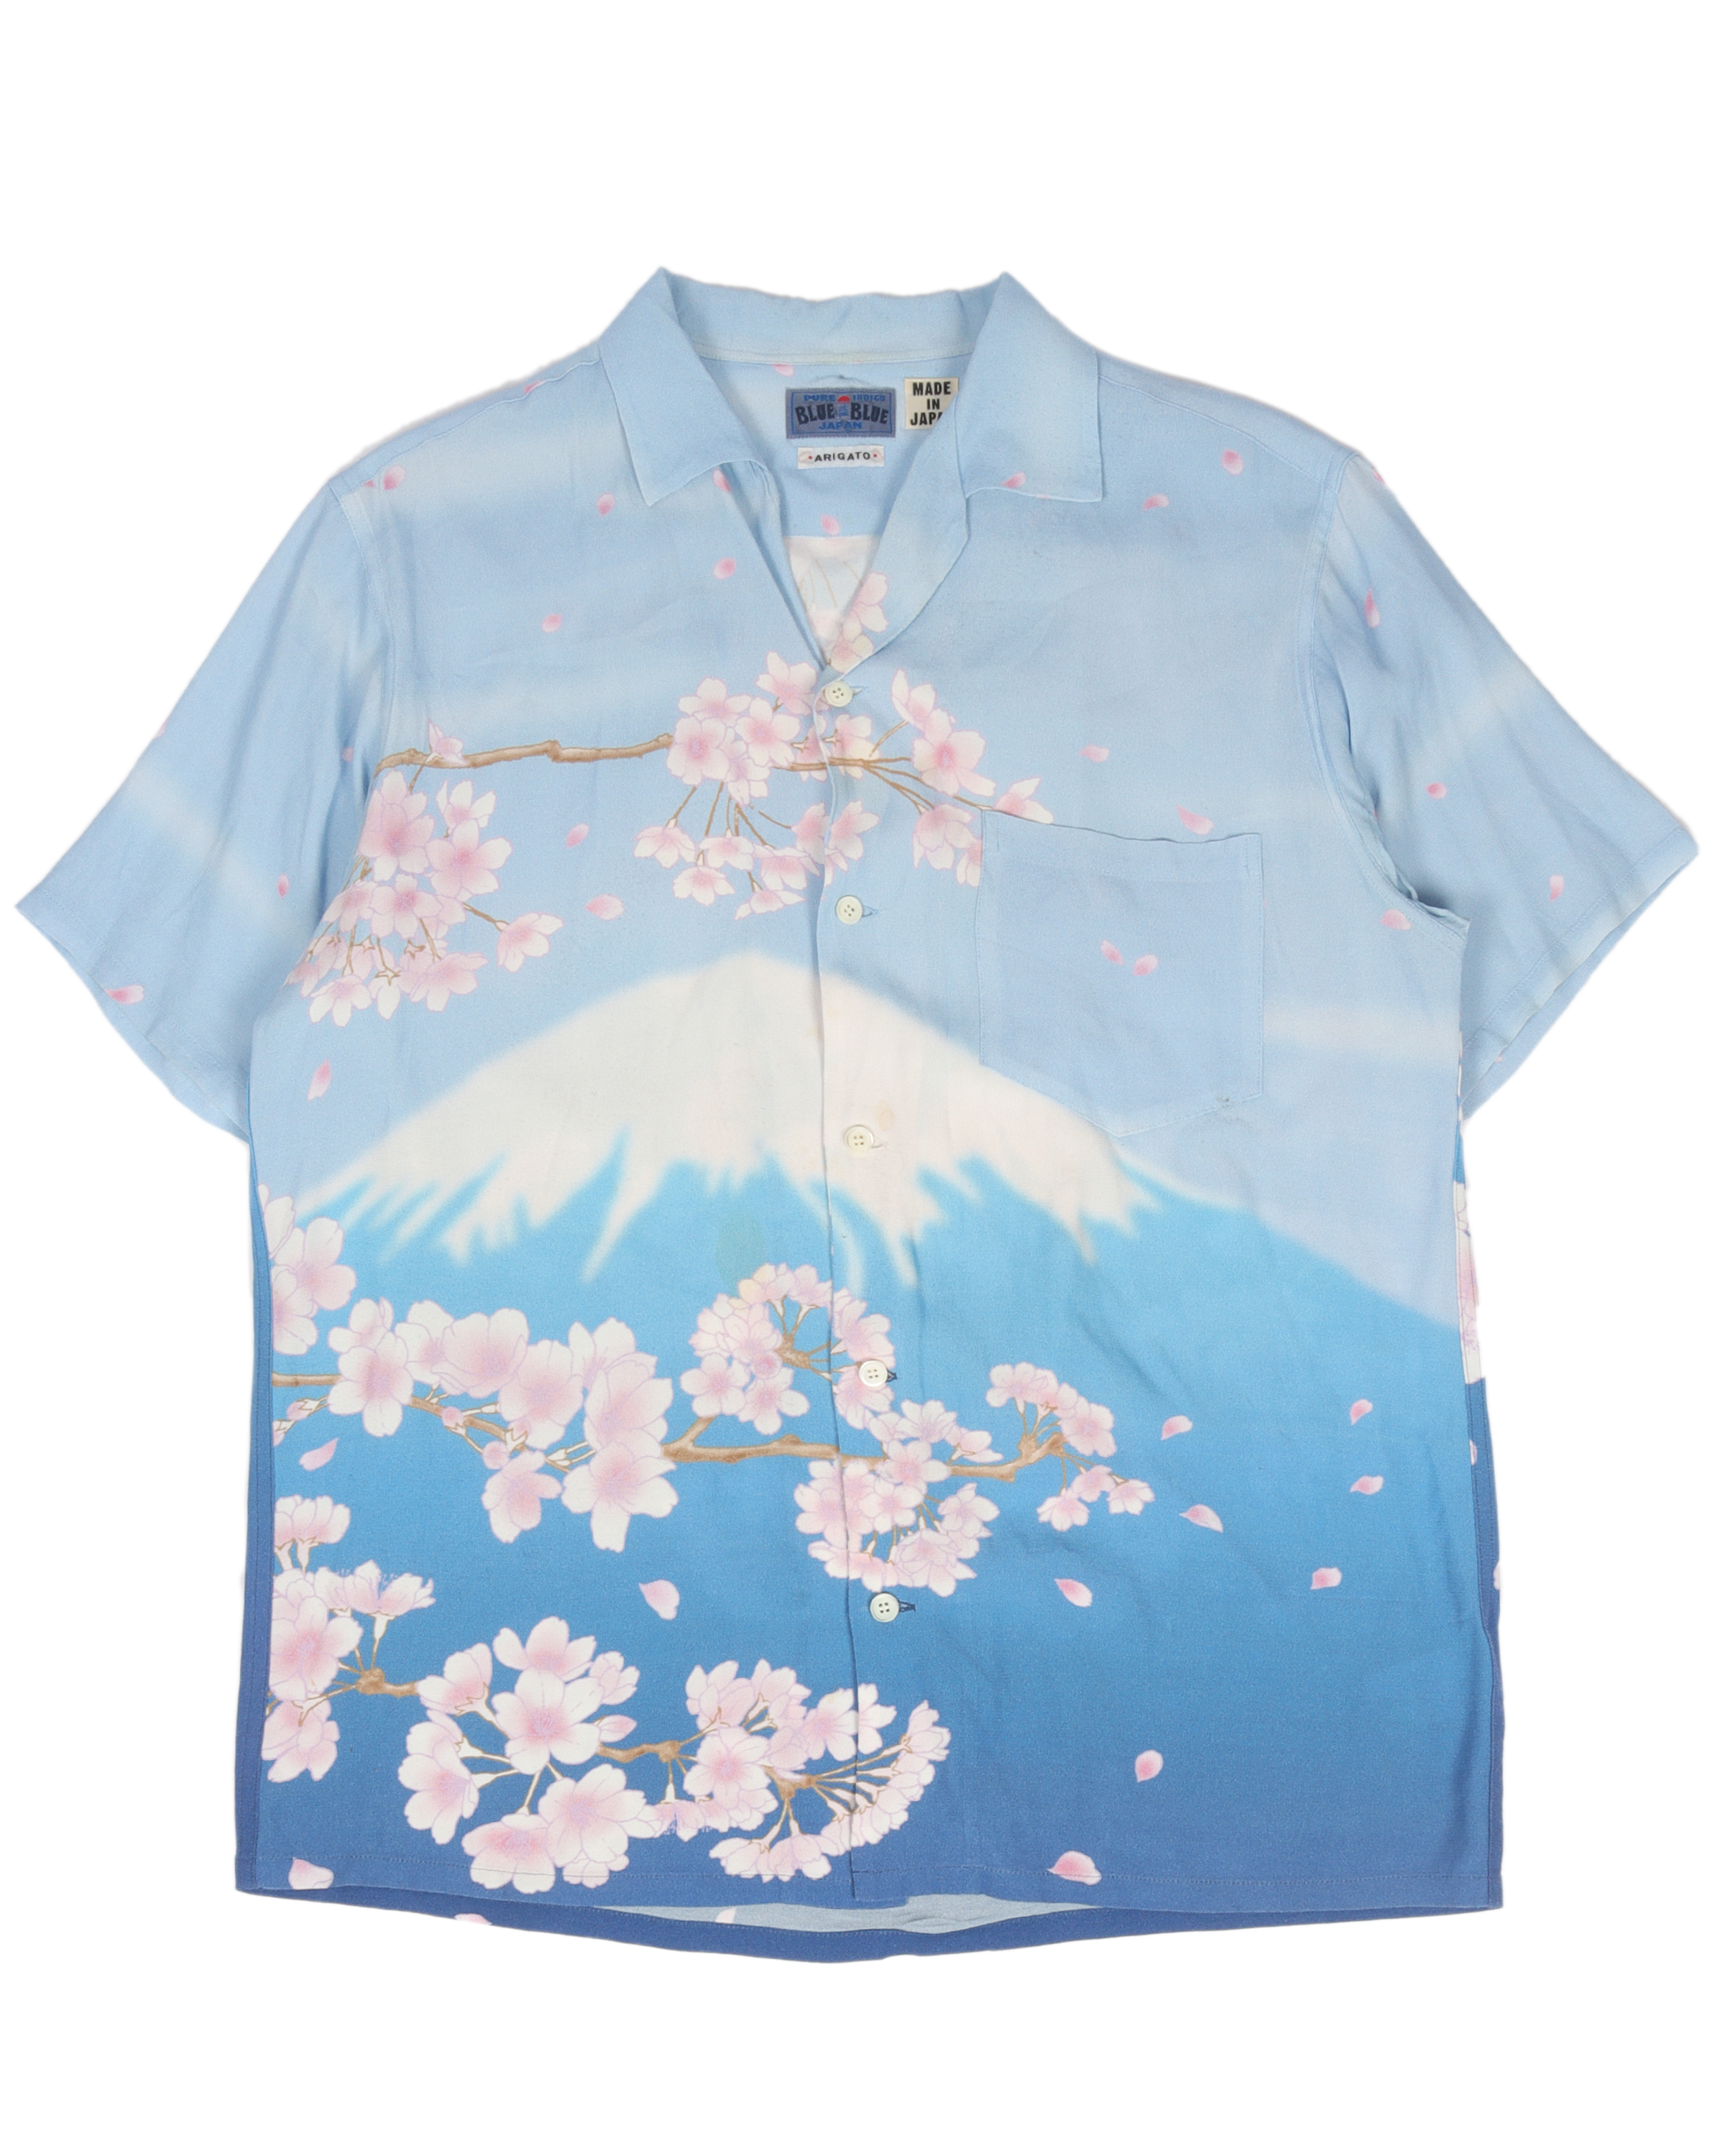 Japan Mount Fuji Button Up Shirt